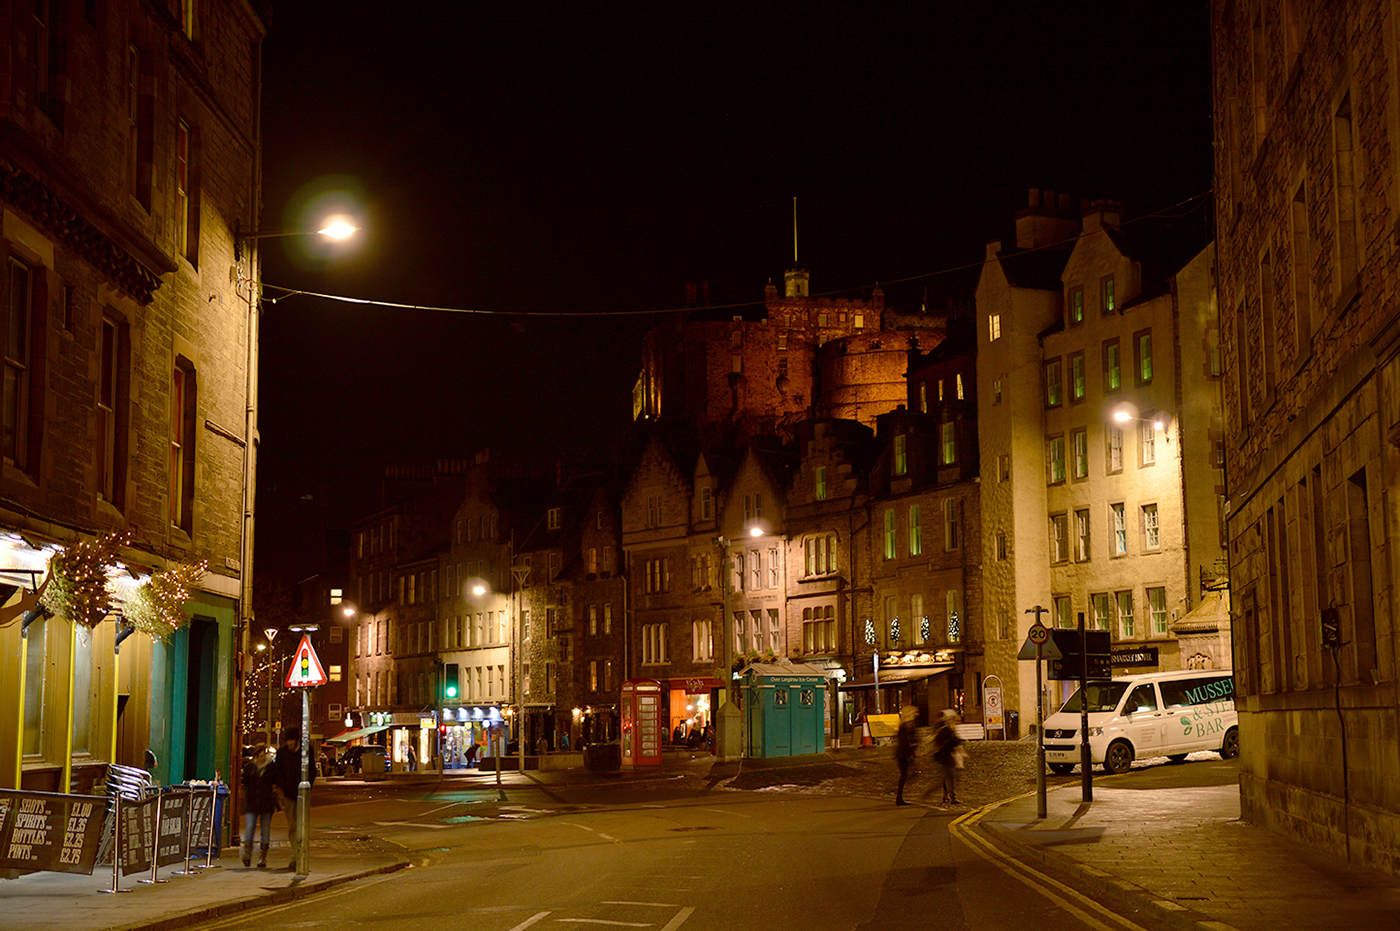 edinburgh twilight street photography night buildings lights